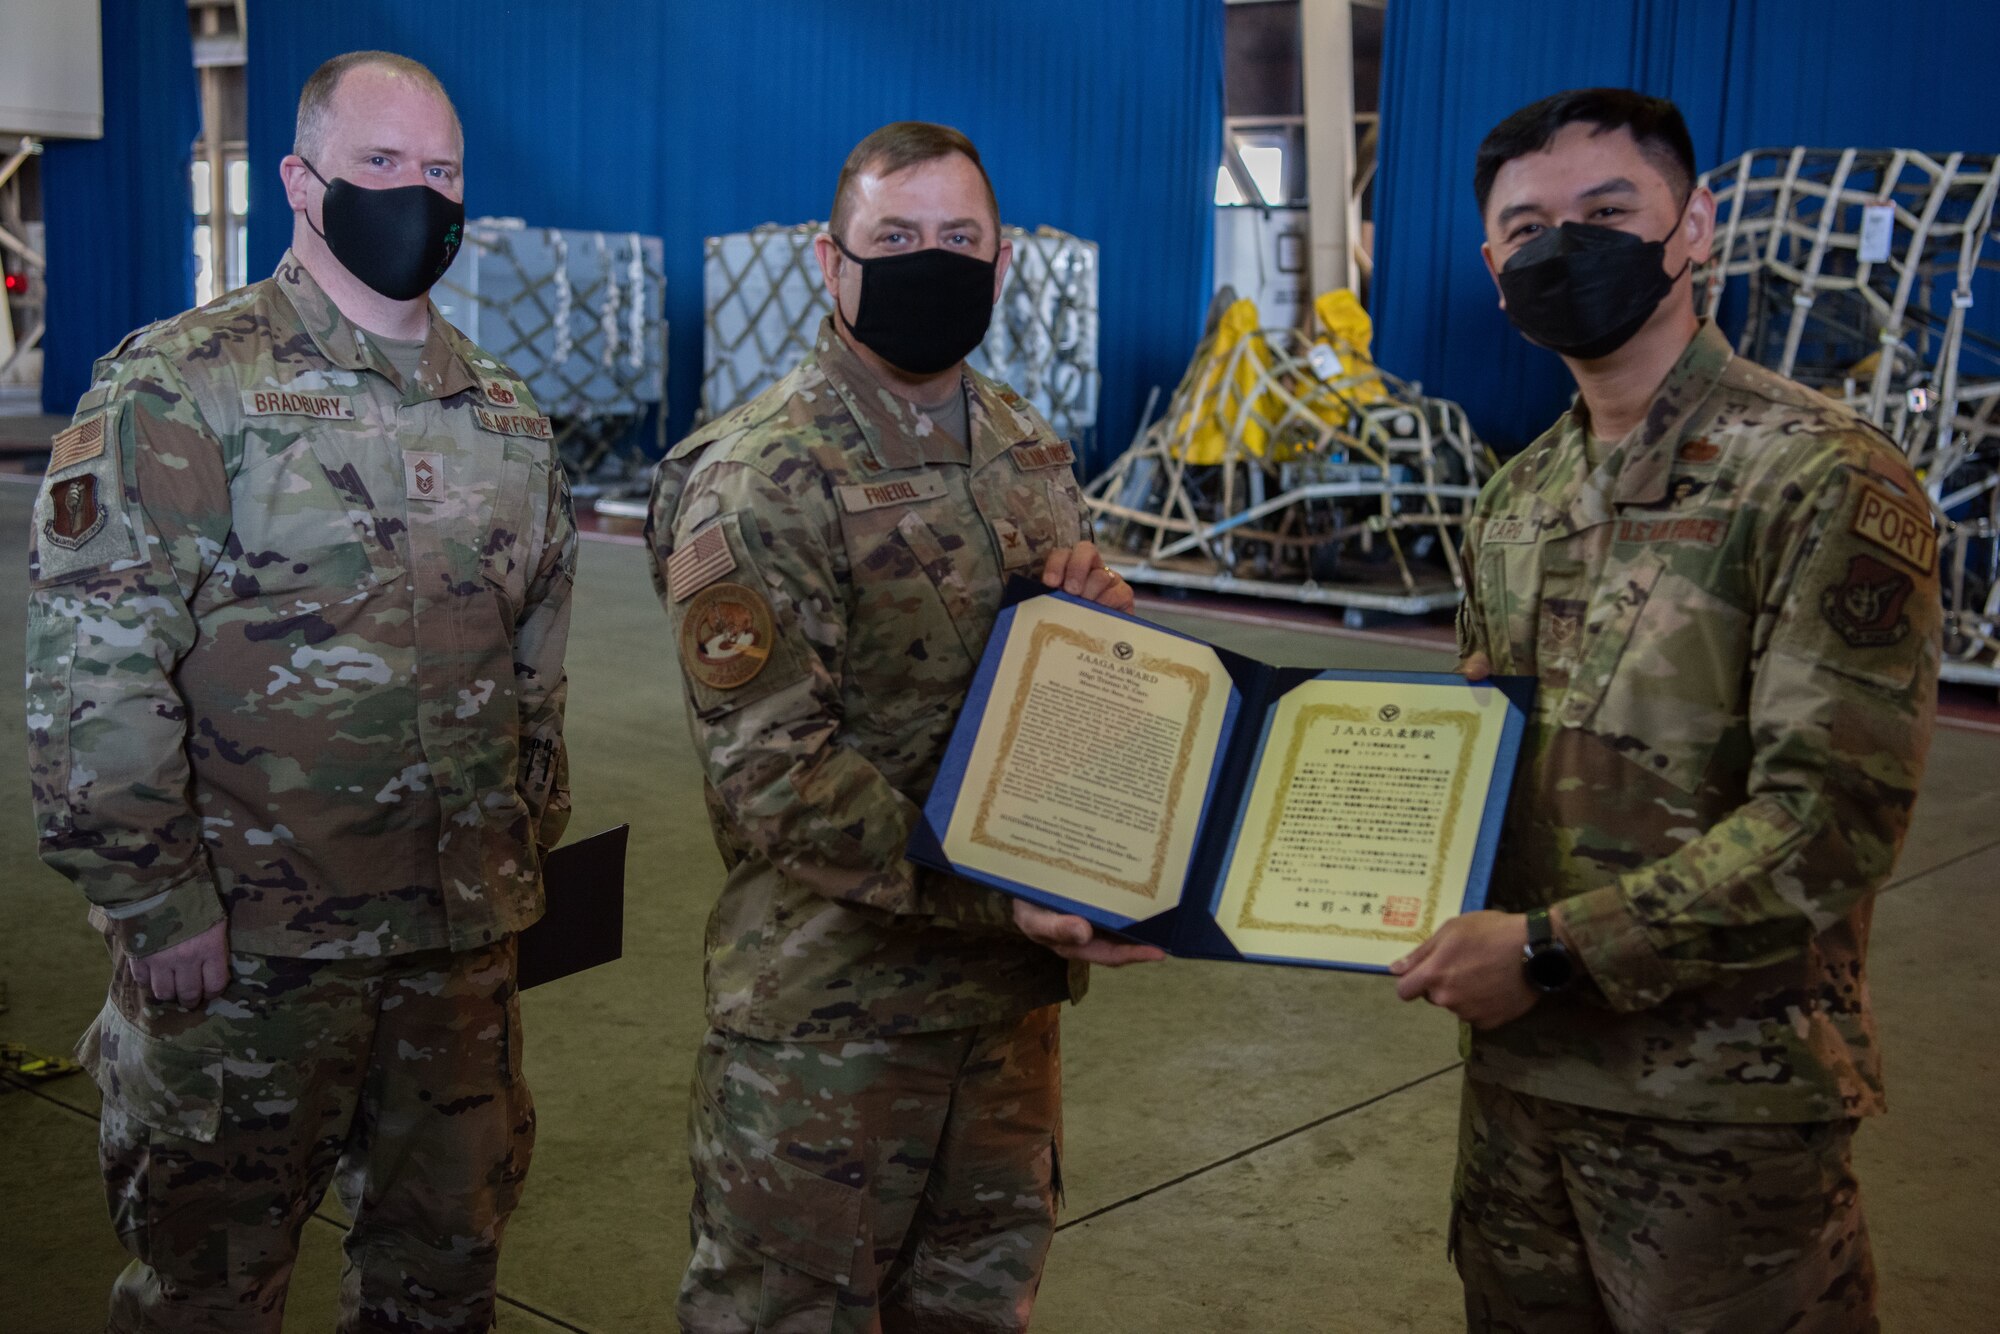 A military member accepts an award.